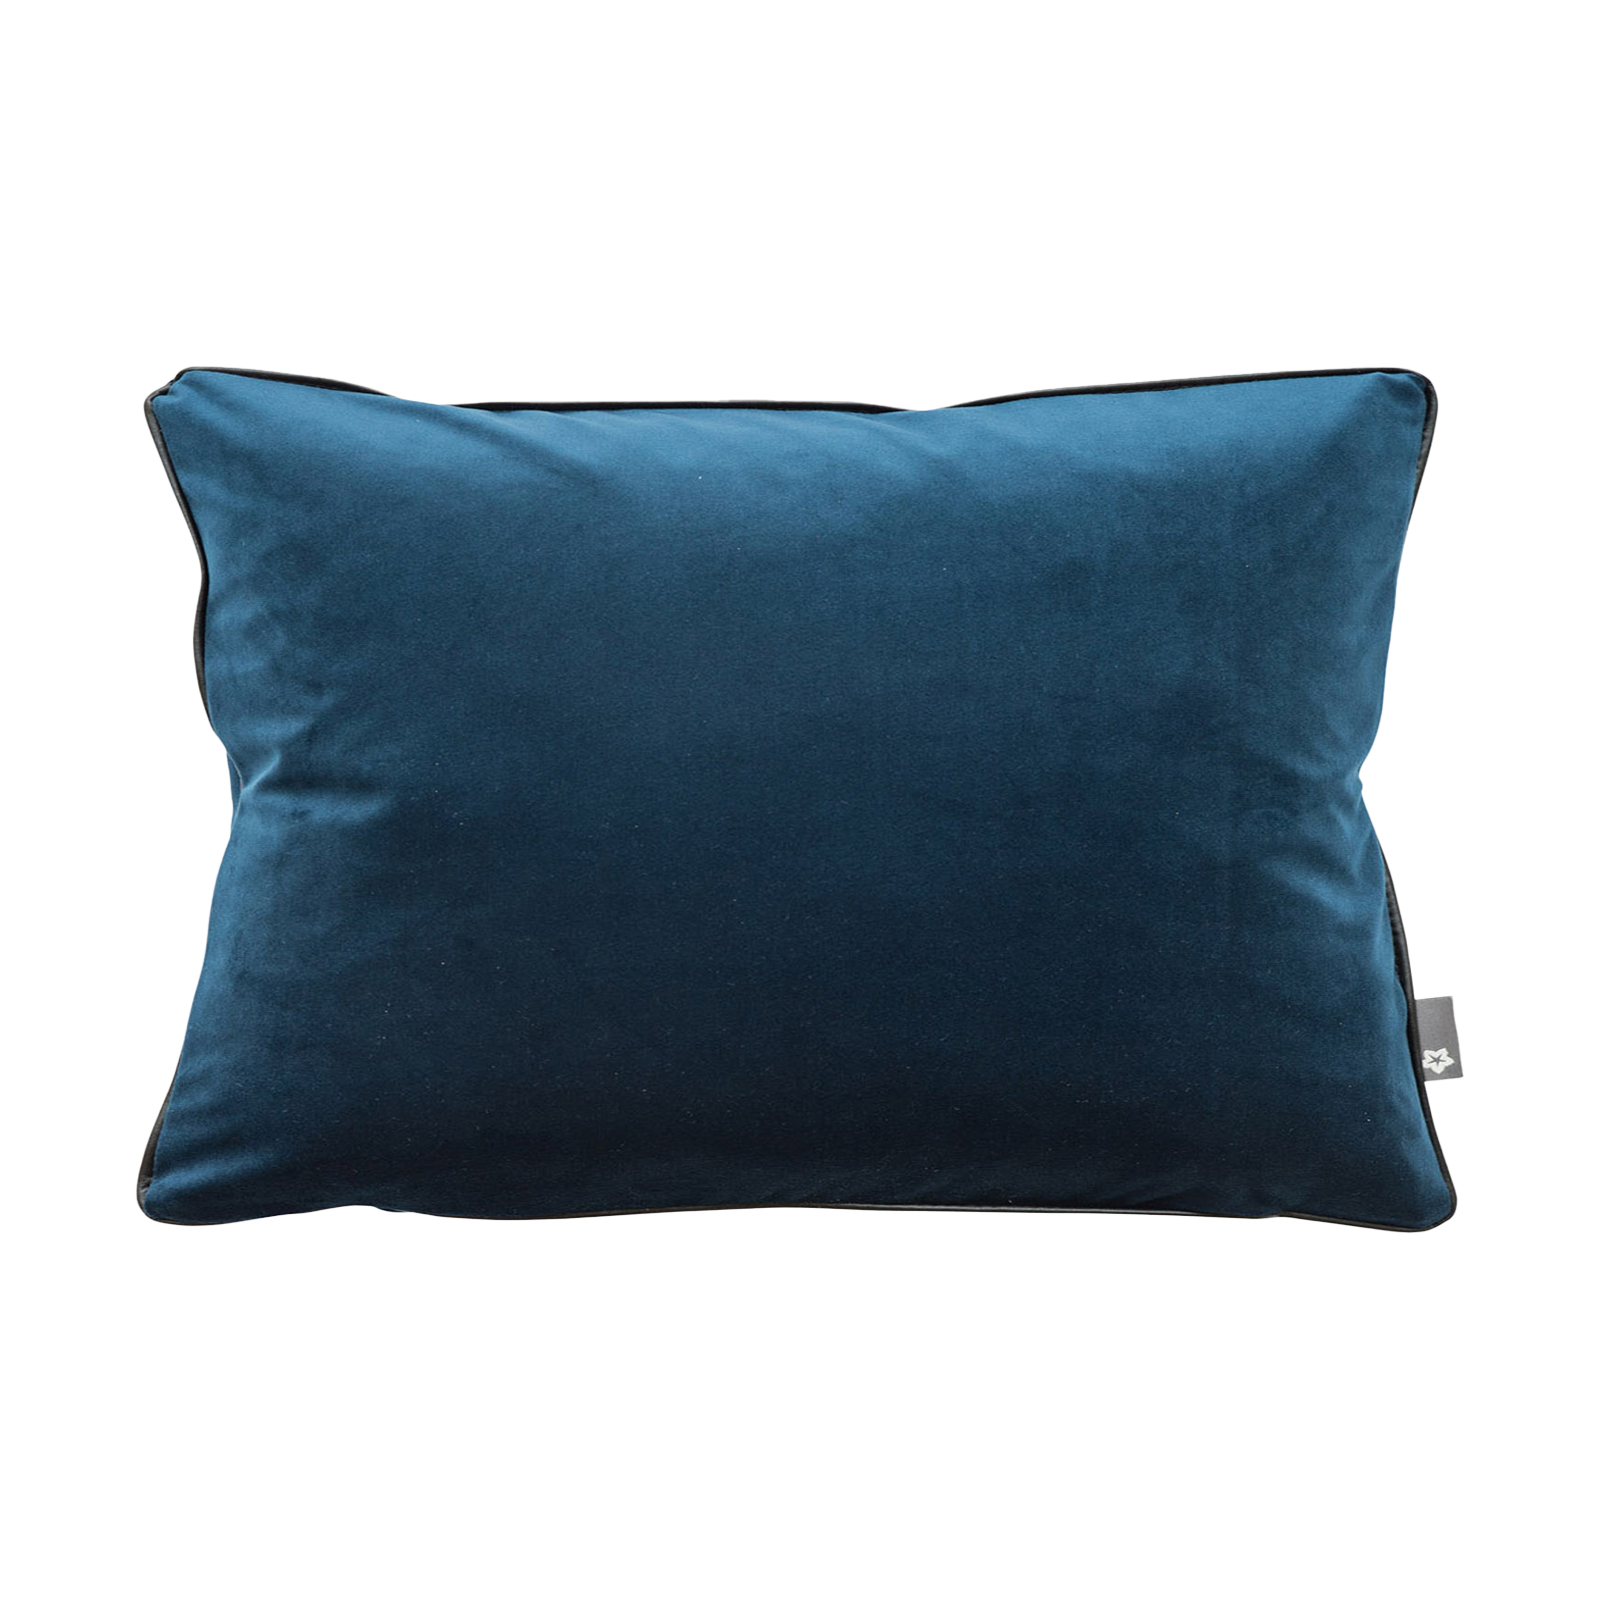 Größe: 31x 51 cm Farbe: nachtblau #farbe_nachtblau